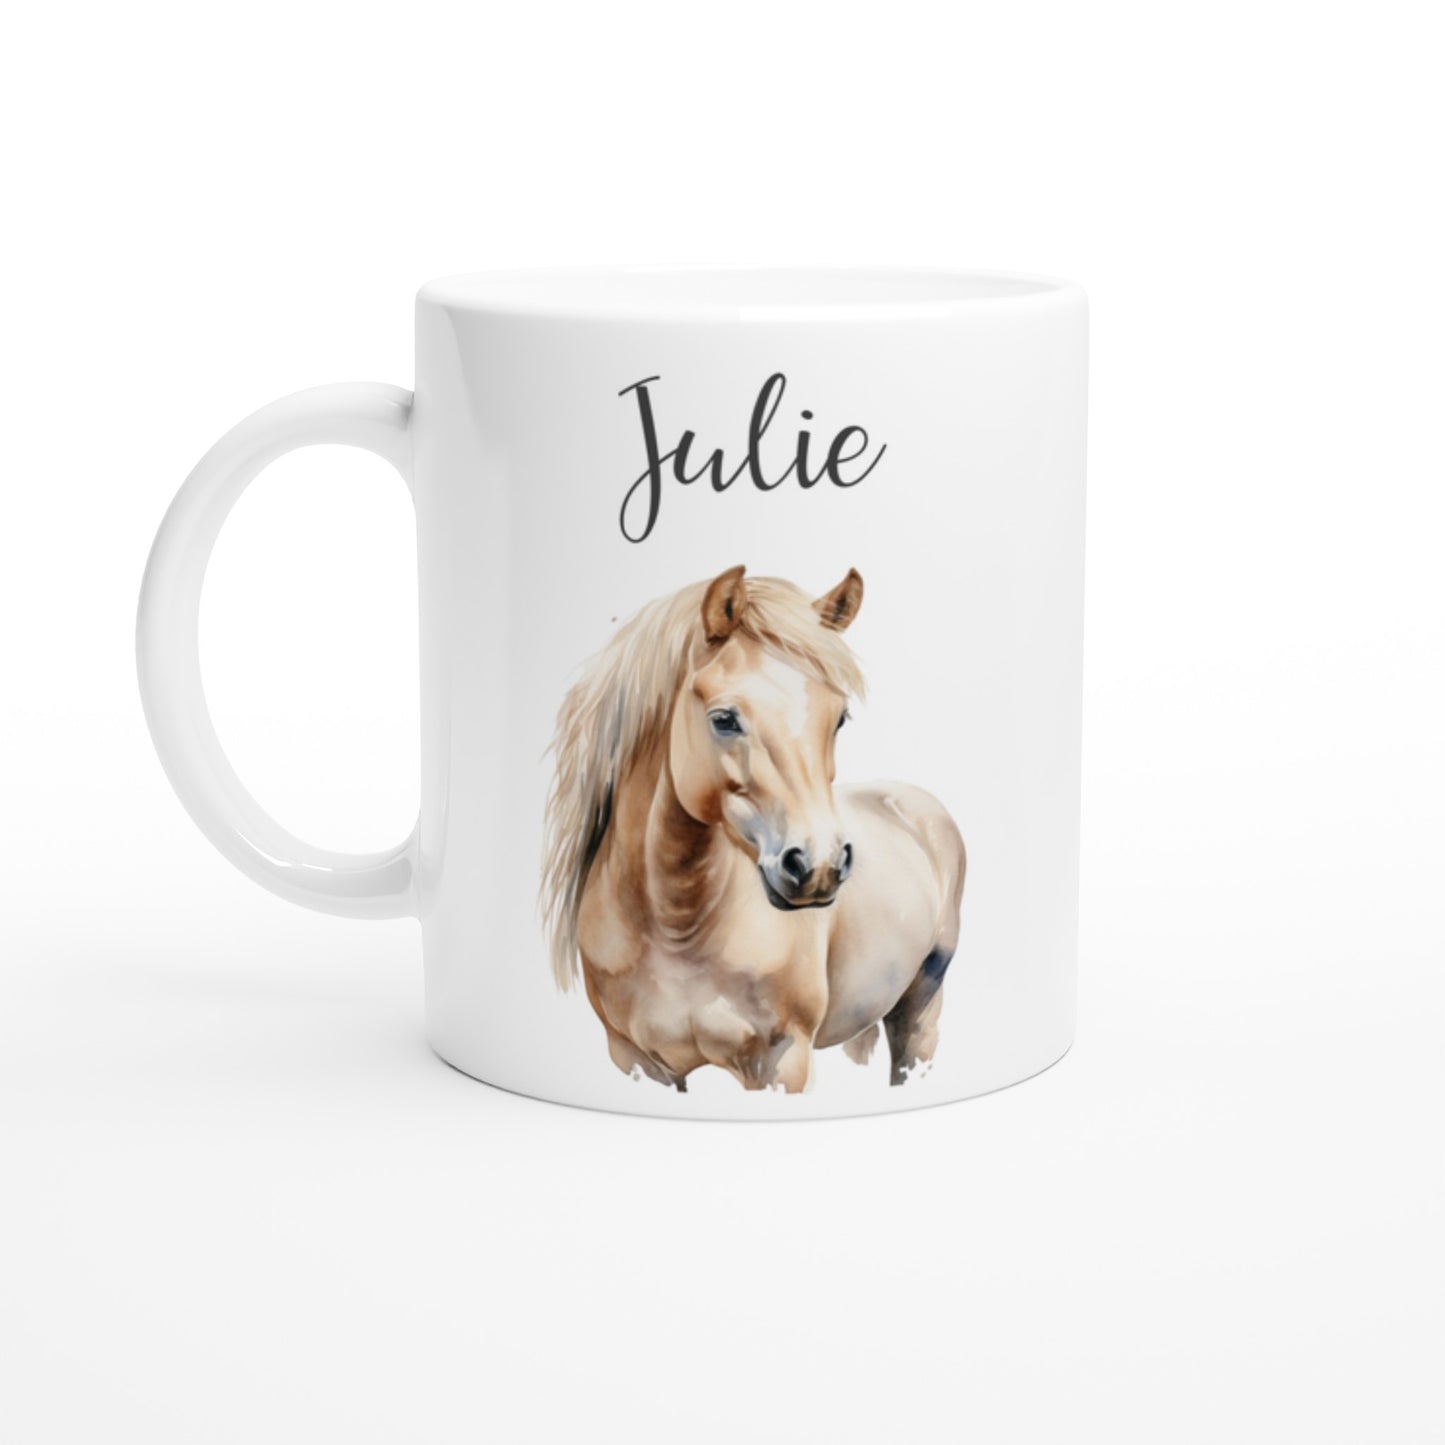 Personalised fjord horse mug